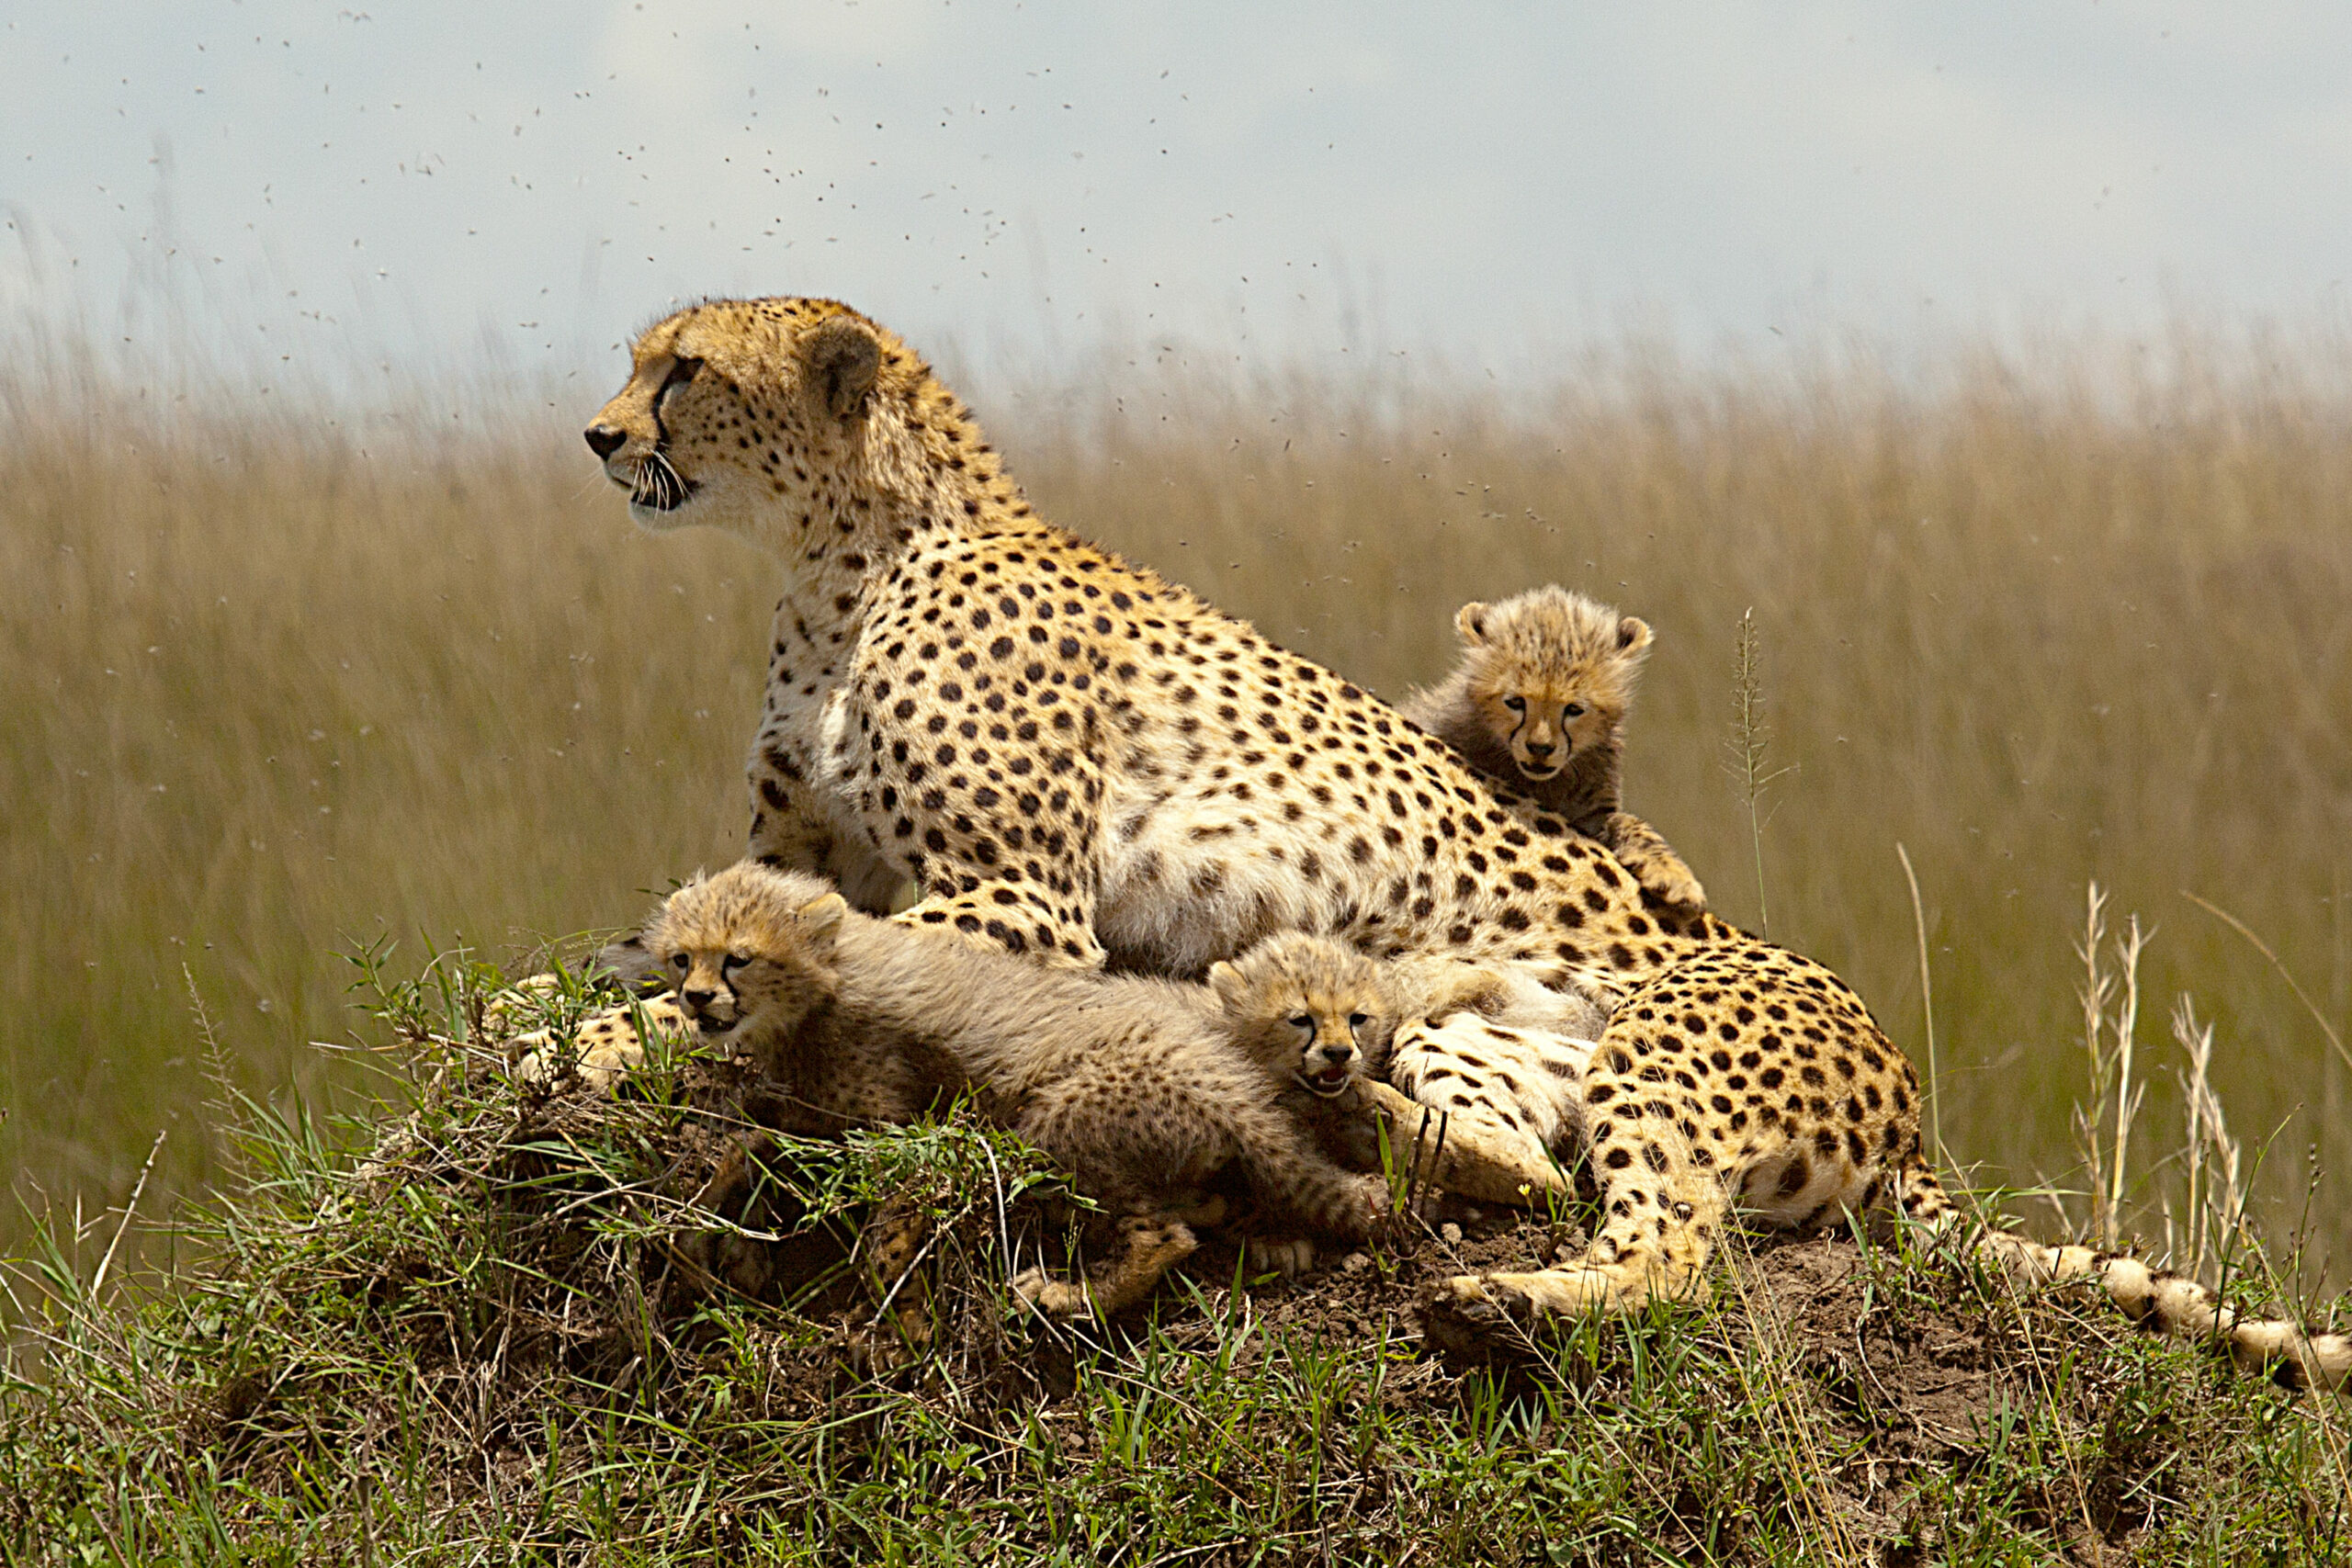 Will evolution doom the cheetah? - Understanding Evolution